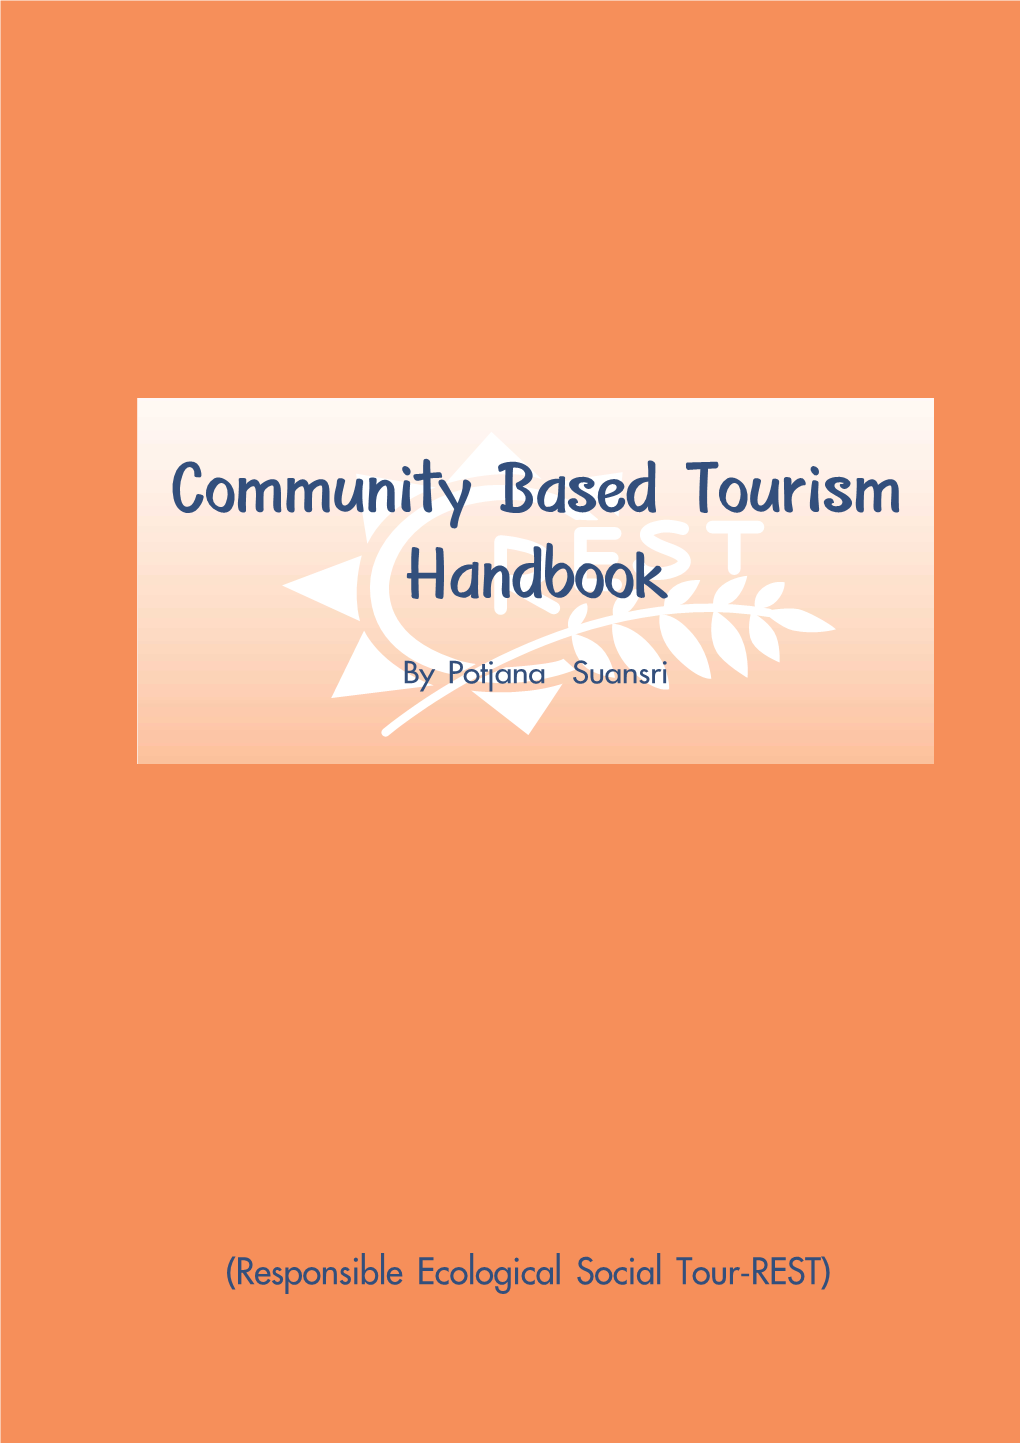 Community Based Tourism Handbook by Potjana Suansri